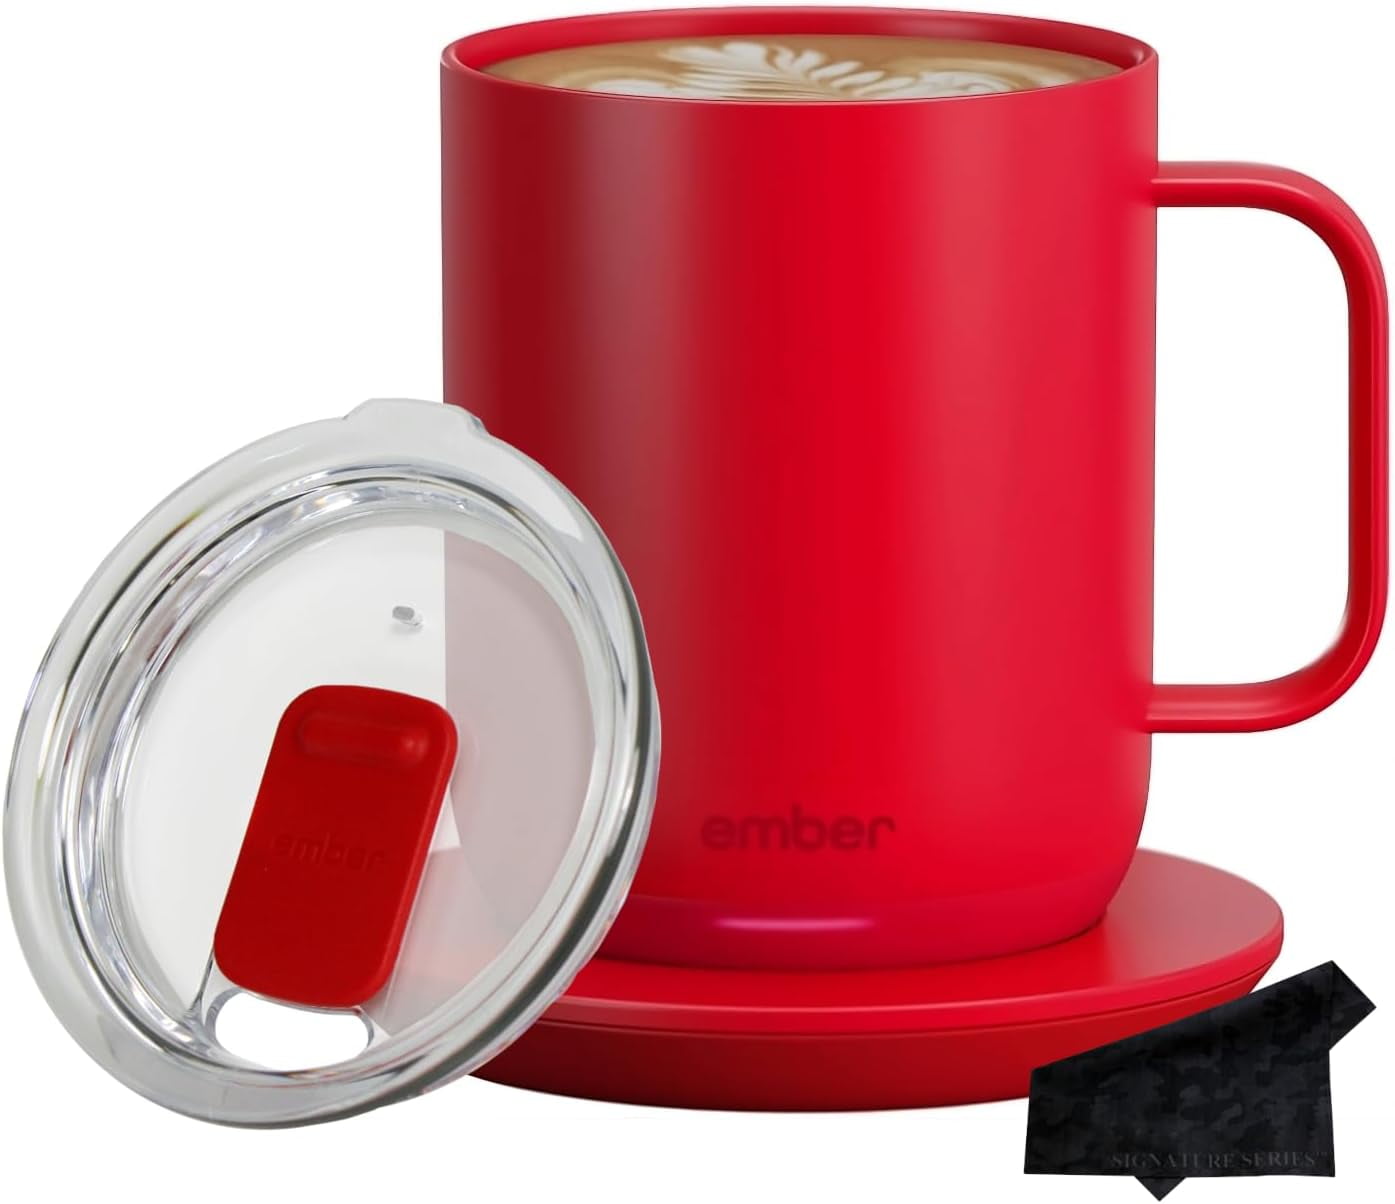 Ember Travel Mug 2 - Heated Travel Mug, New (RED) Travel Mug - Ember®